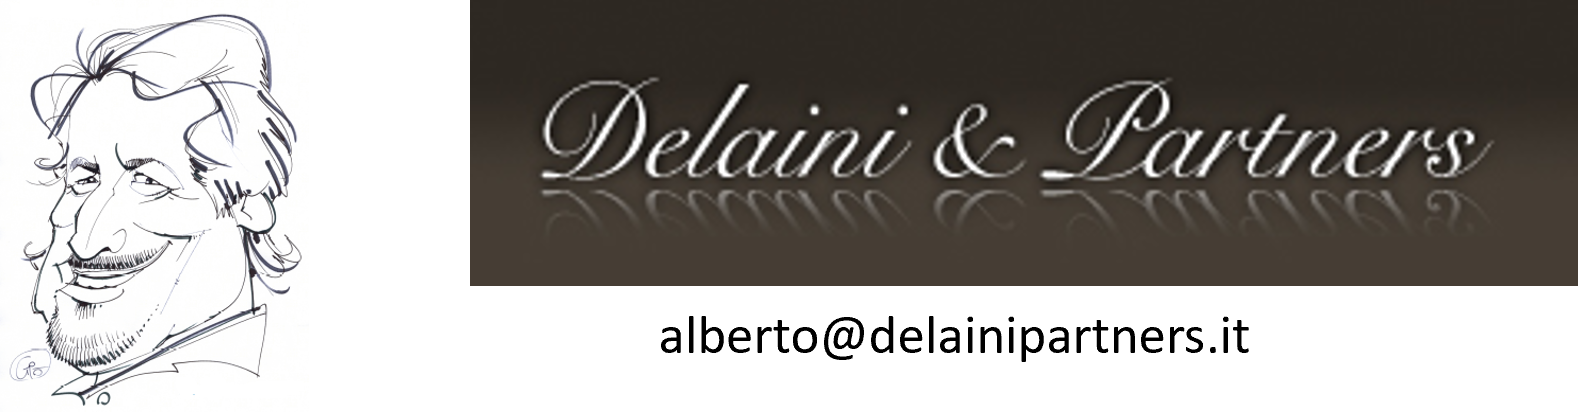 Alberto Delaini - Delaini & Partners